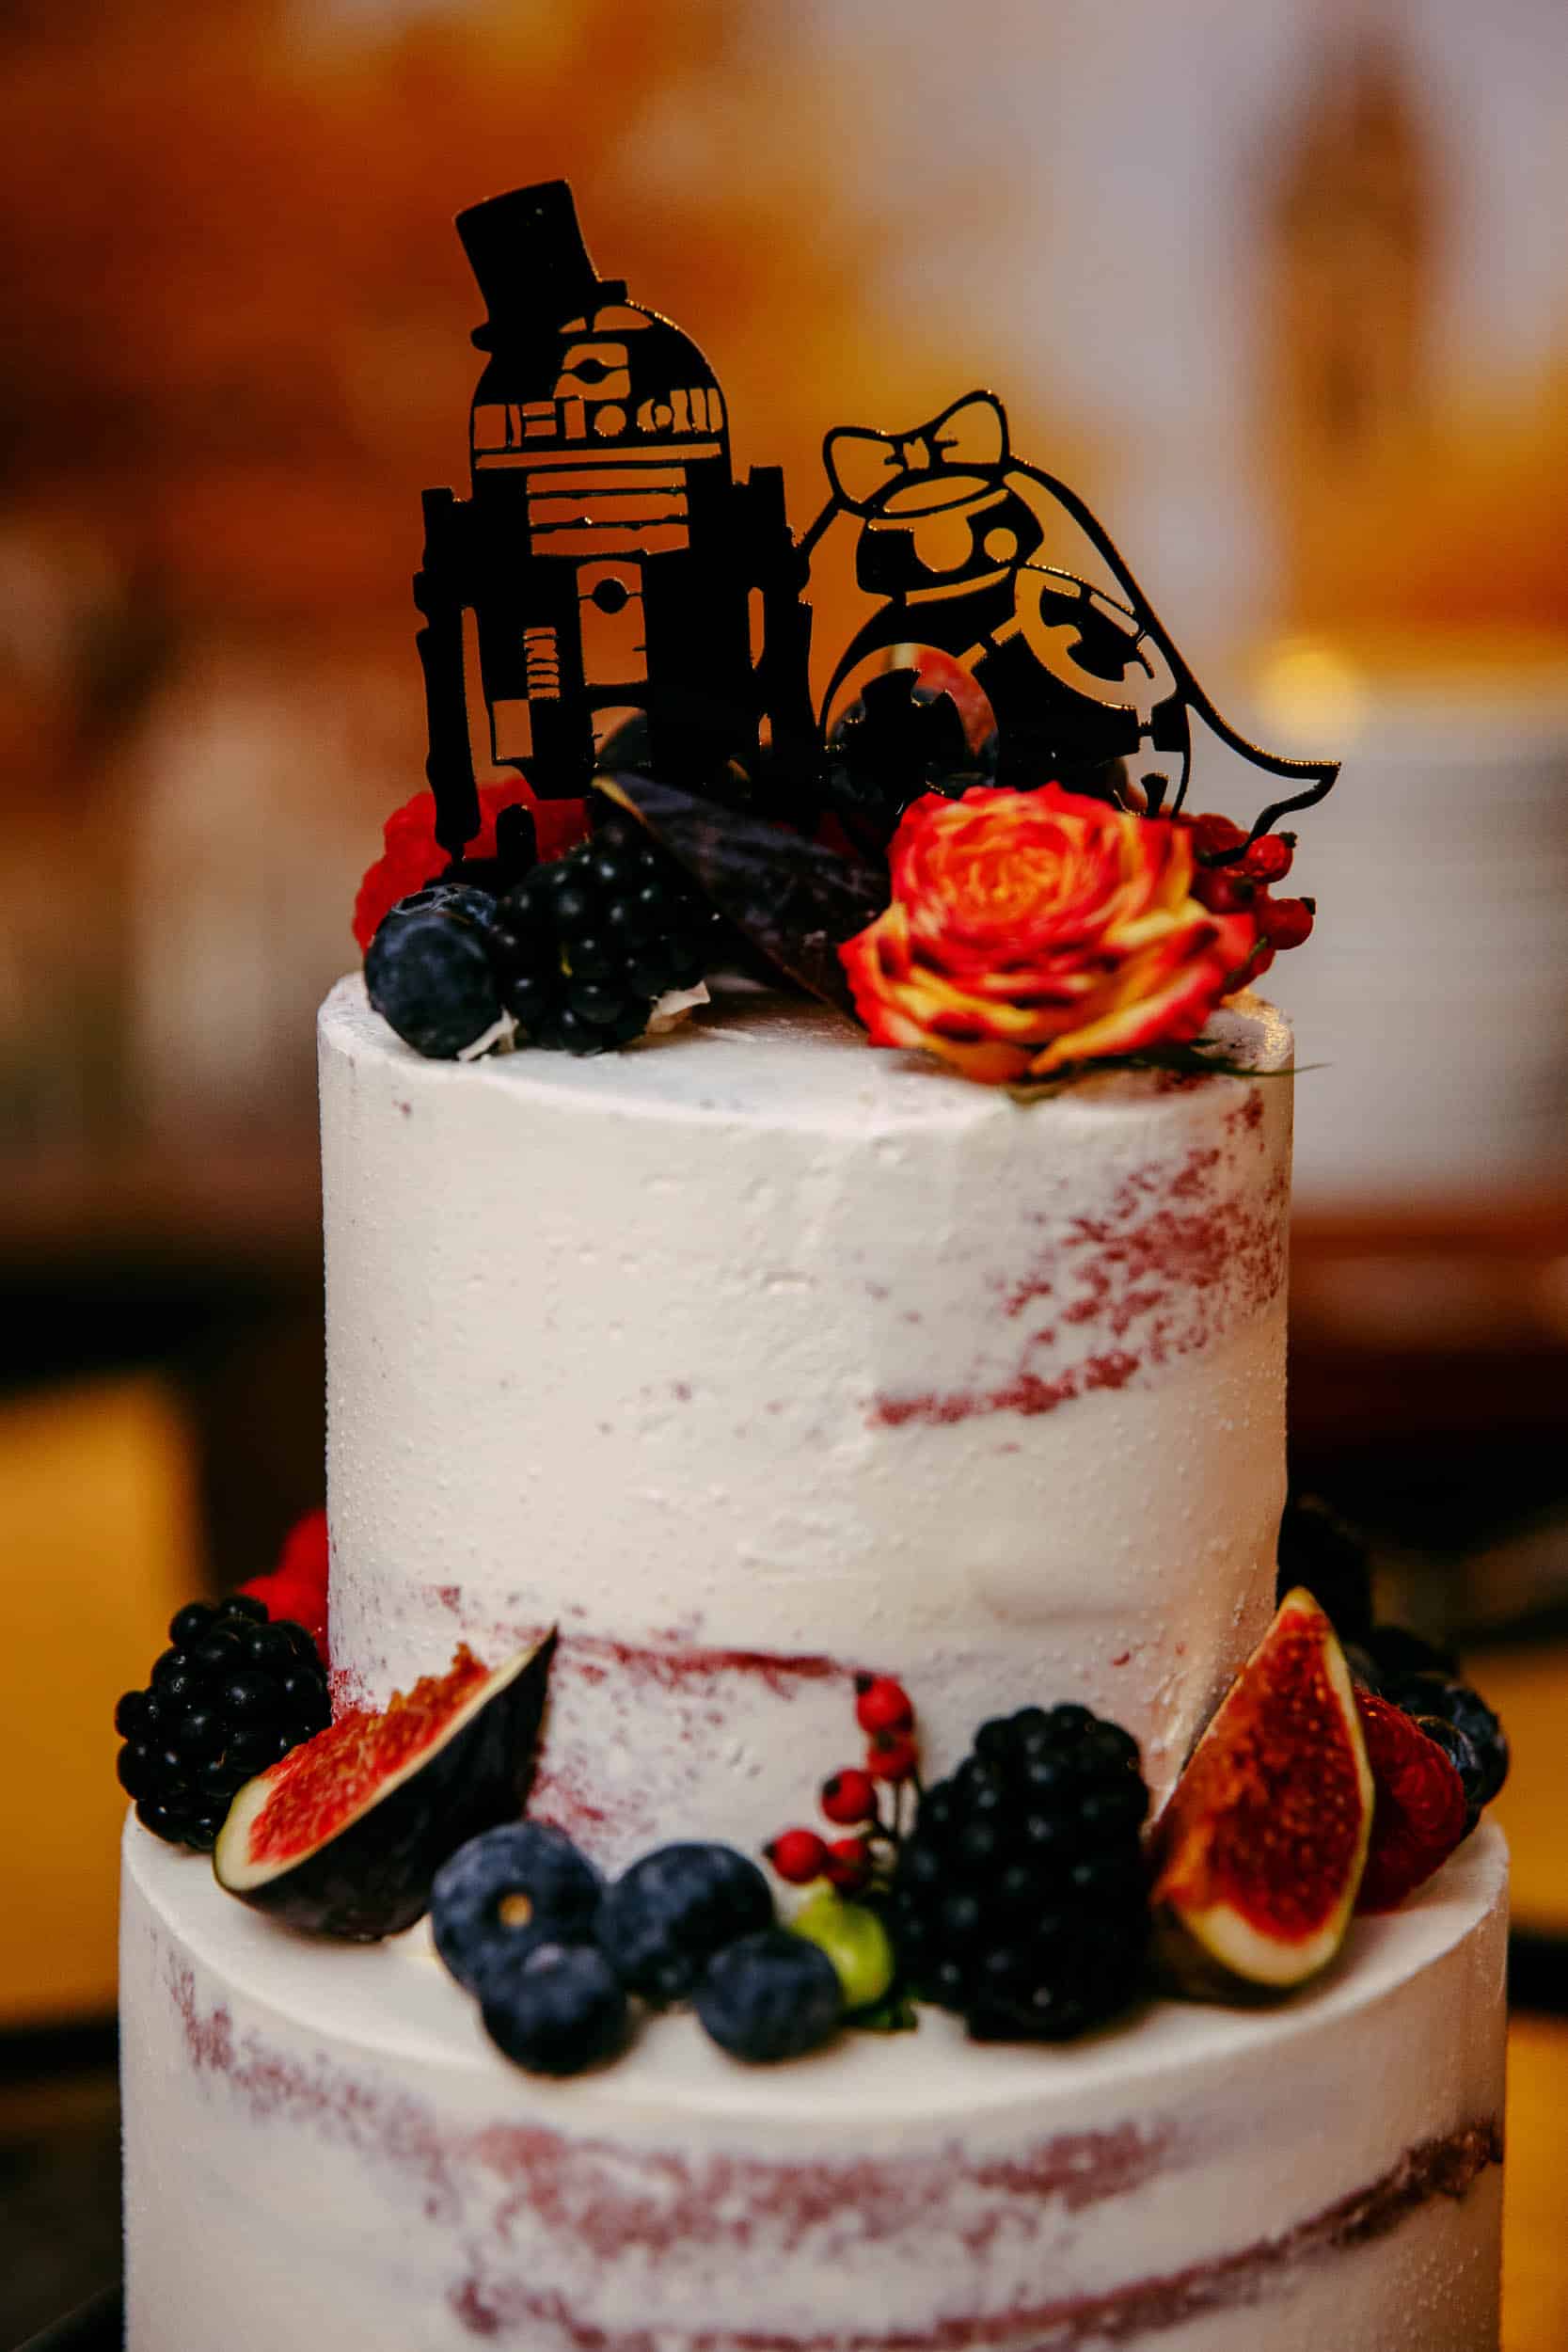 Description: Wedding themed Star Wars cake topper.